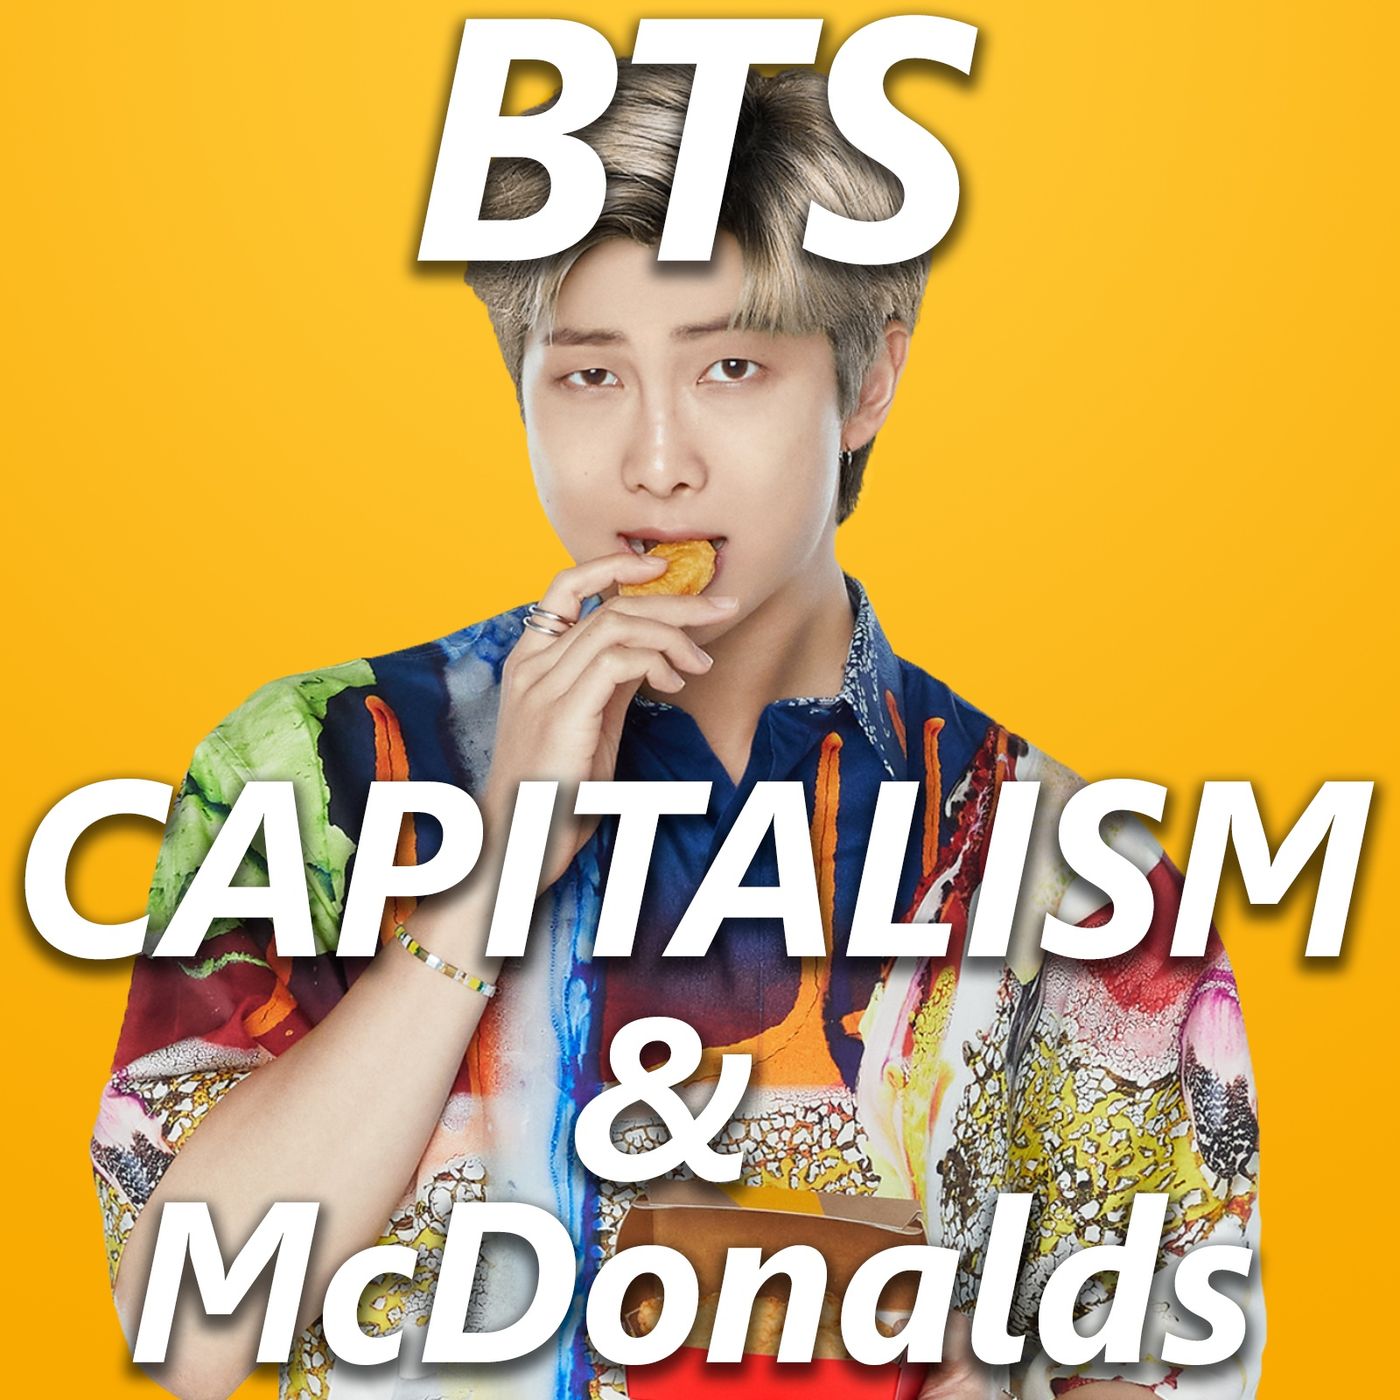 A Discussion on BTS, Capitalism, & McDonalds